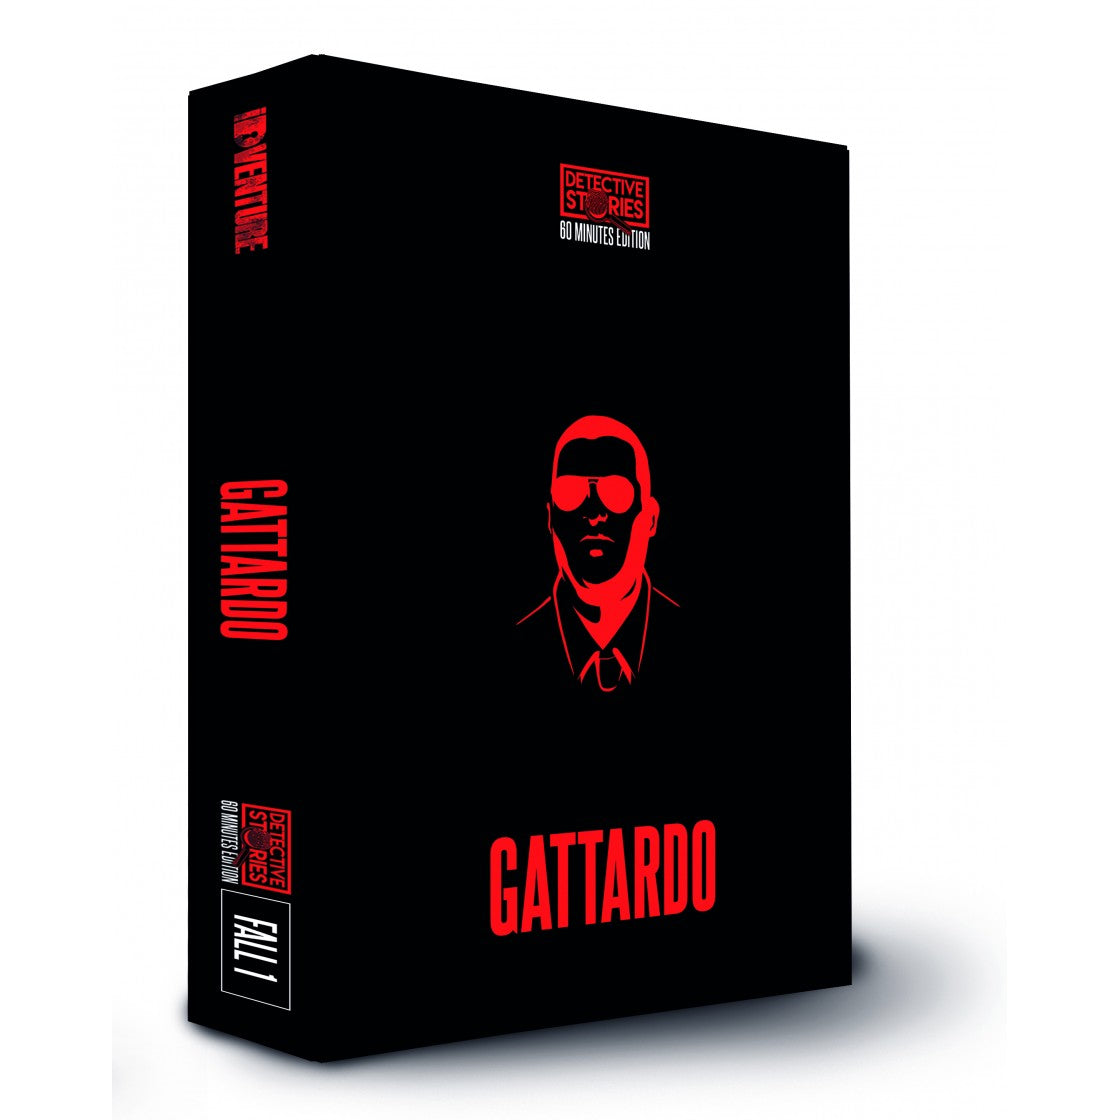 Detective Stories - Gattardo